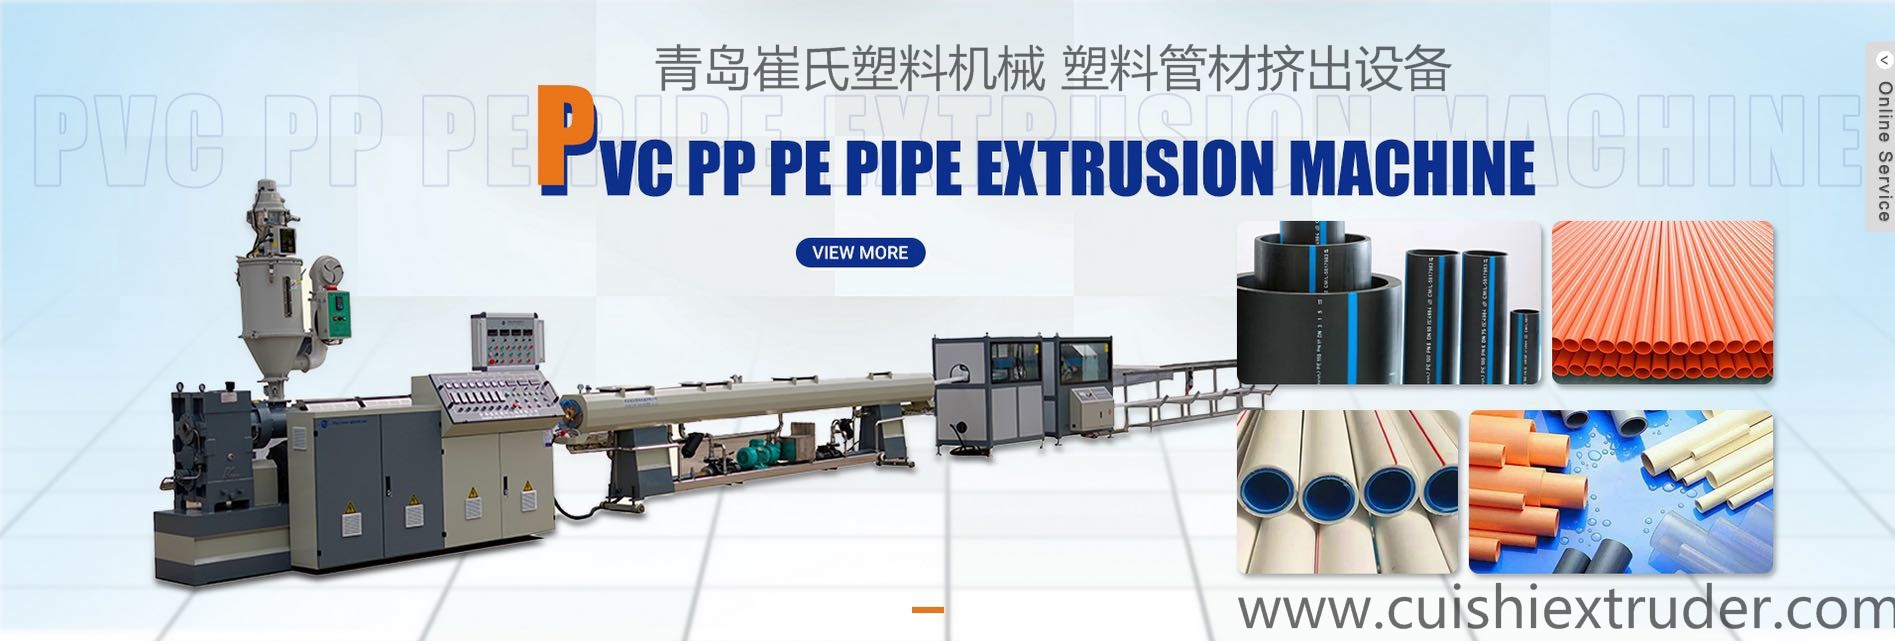 PVC Pipe Extrusion Machine1